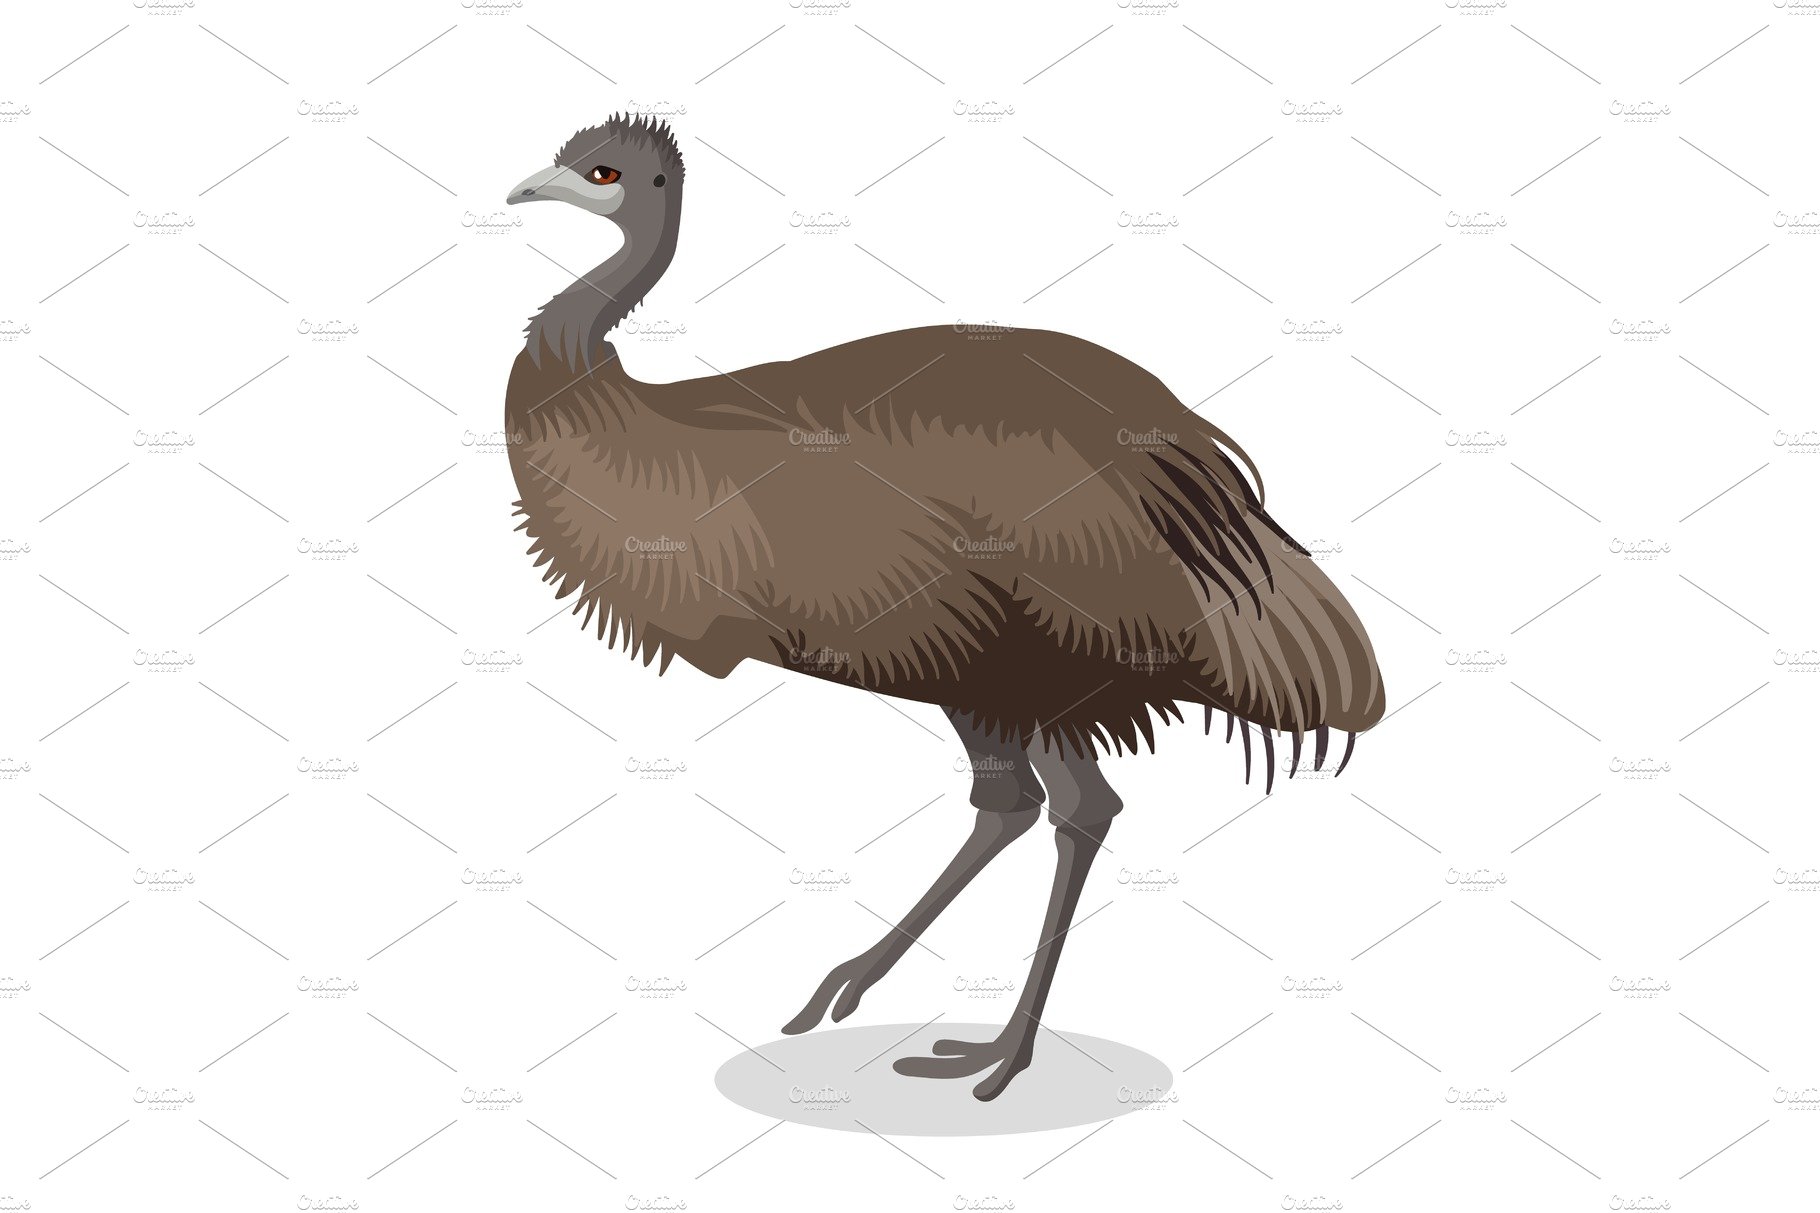 Emu bird full length portrait isolated on white background cover image.